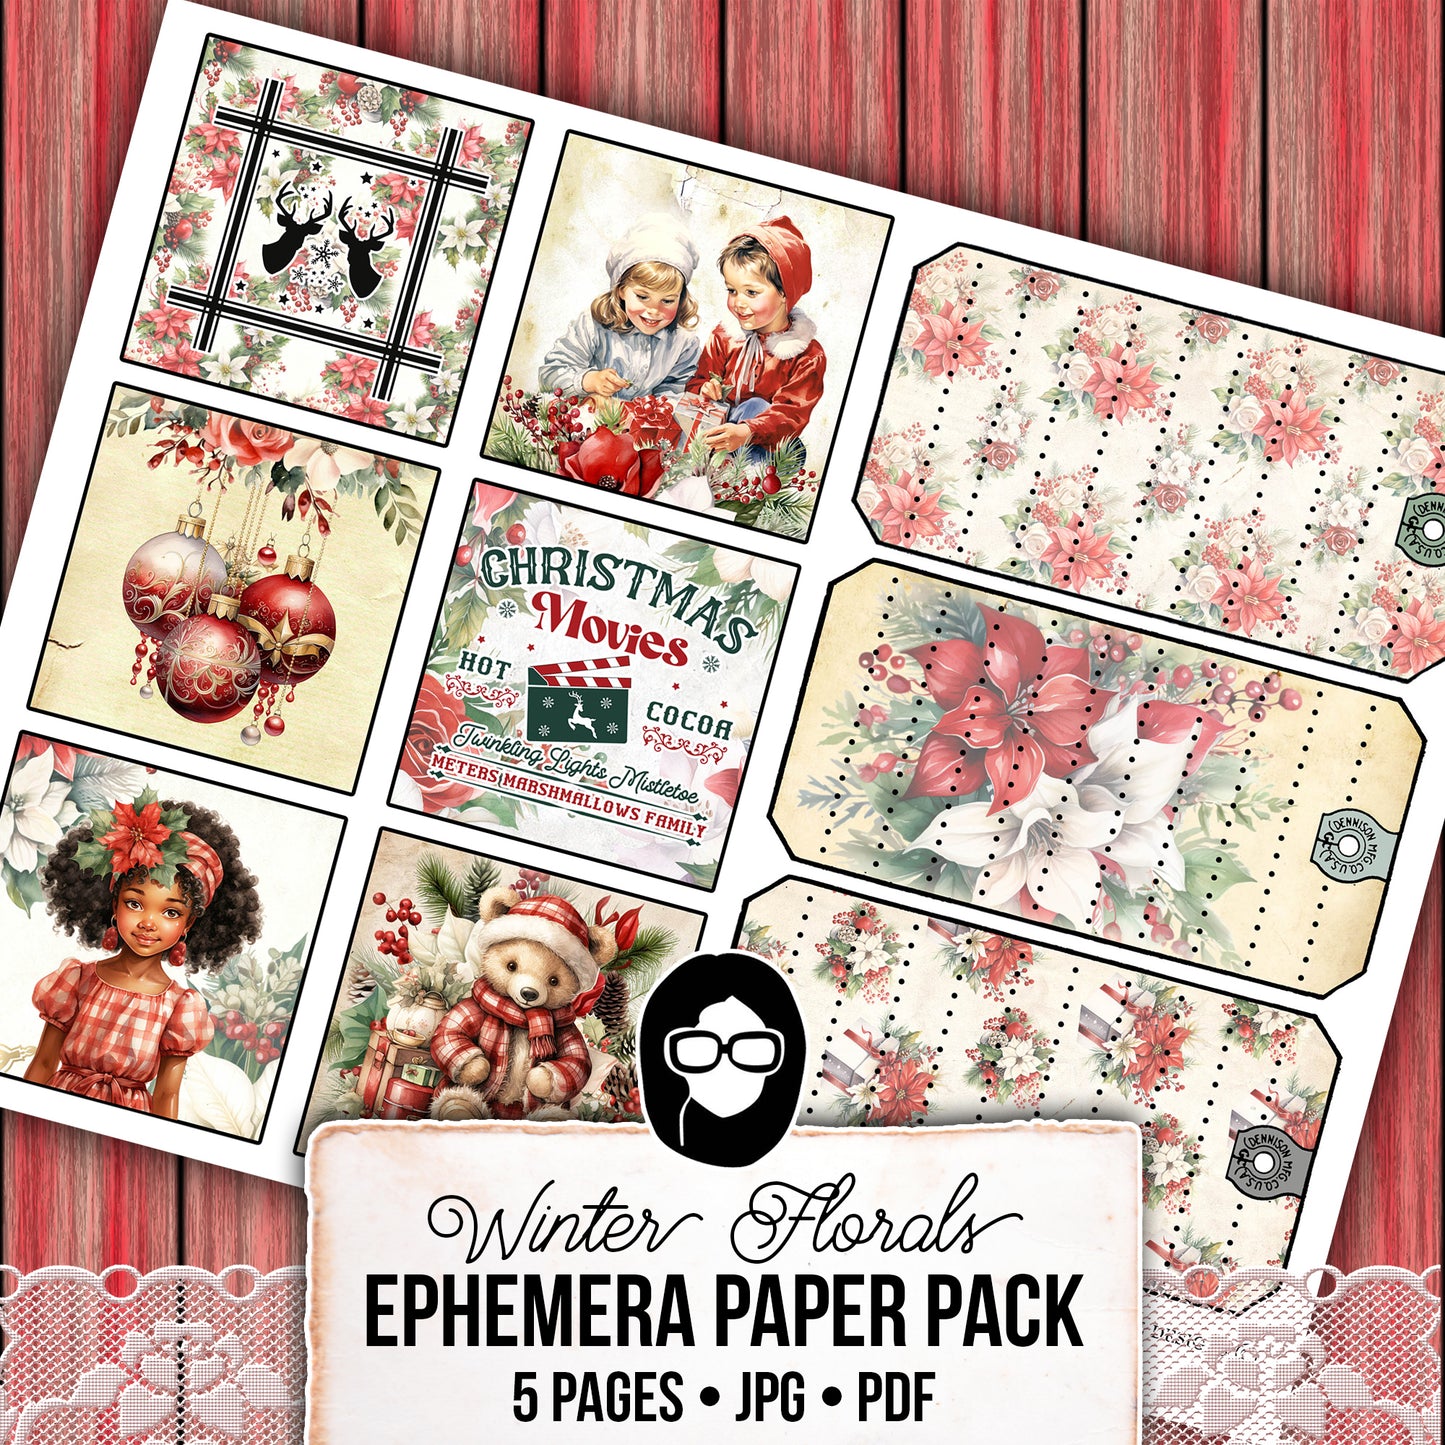 Christmas Printables, Ephemera Fussy Cuts -5pg Digital Download- Junk Journal DIY Kit, Pockets, Envelopes, Labels, Tags, Cards, Titles, Red